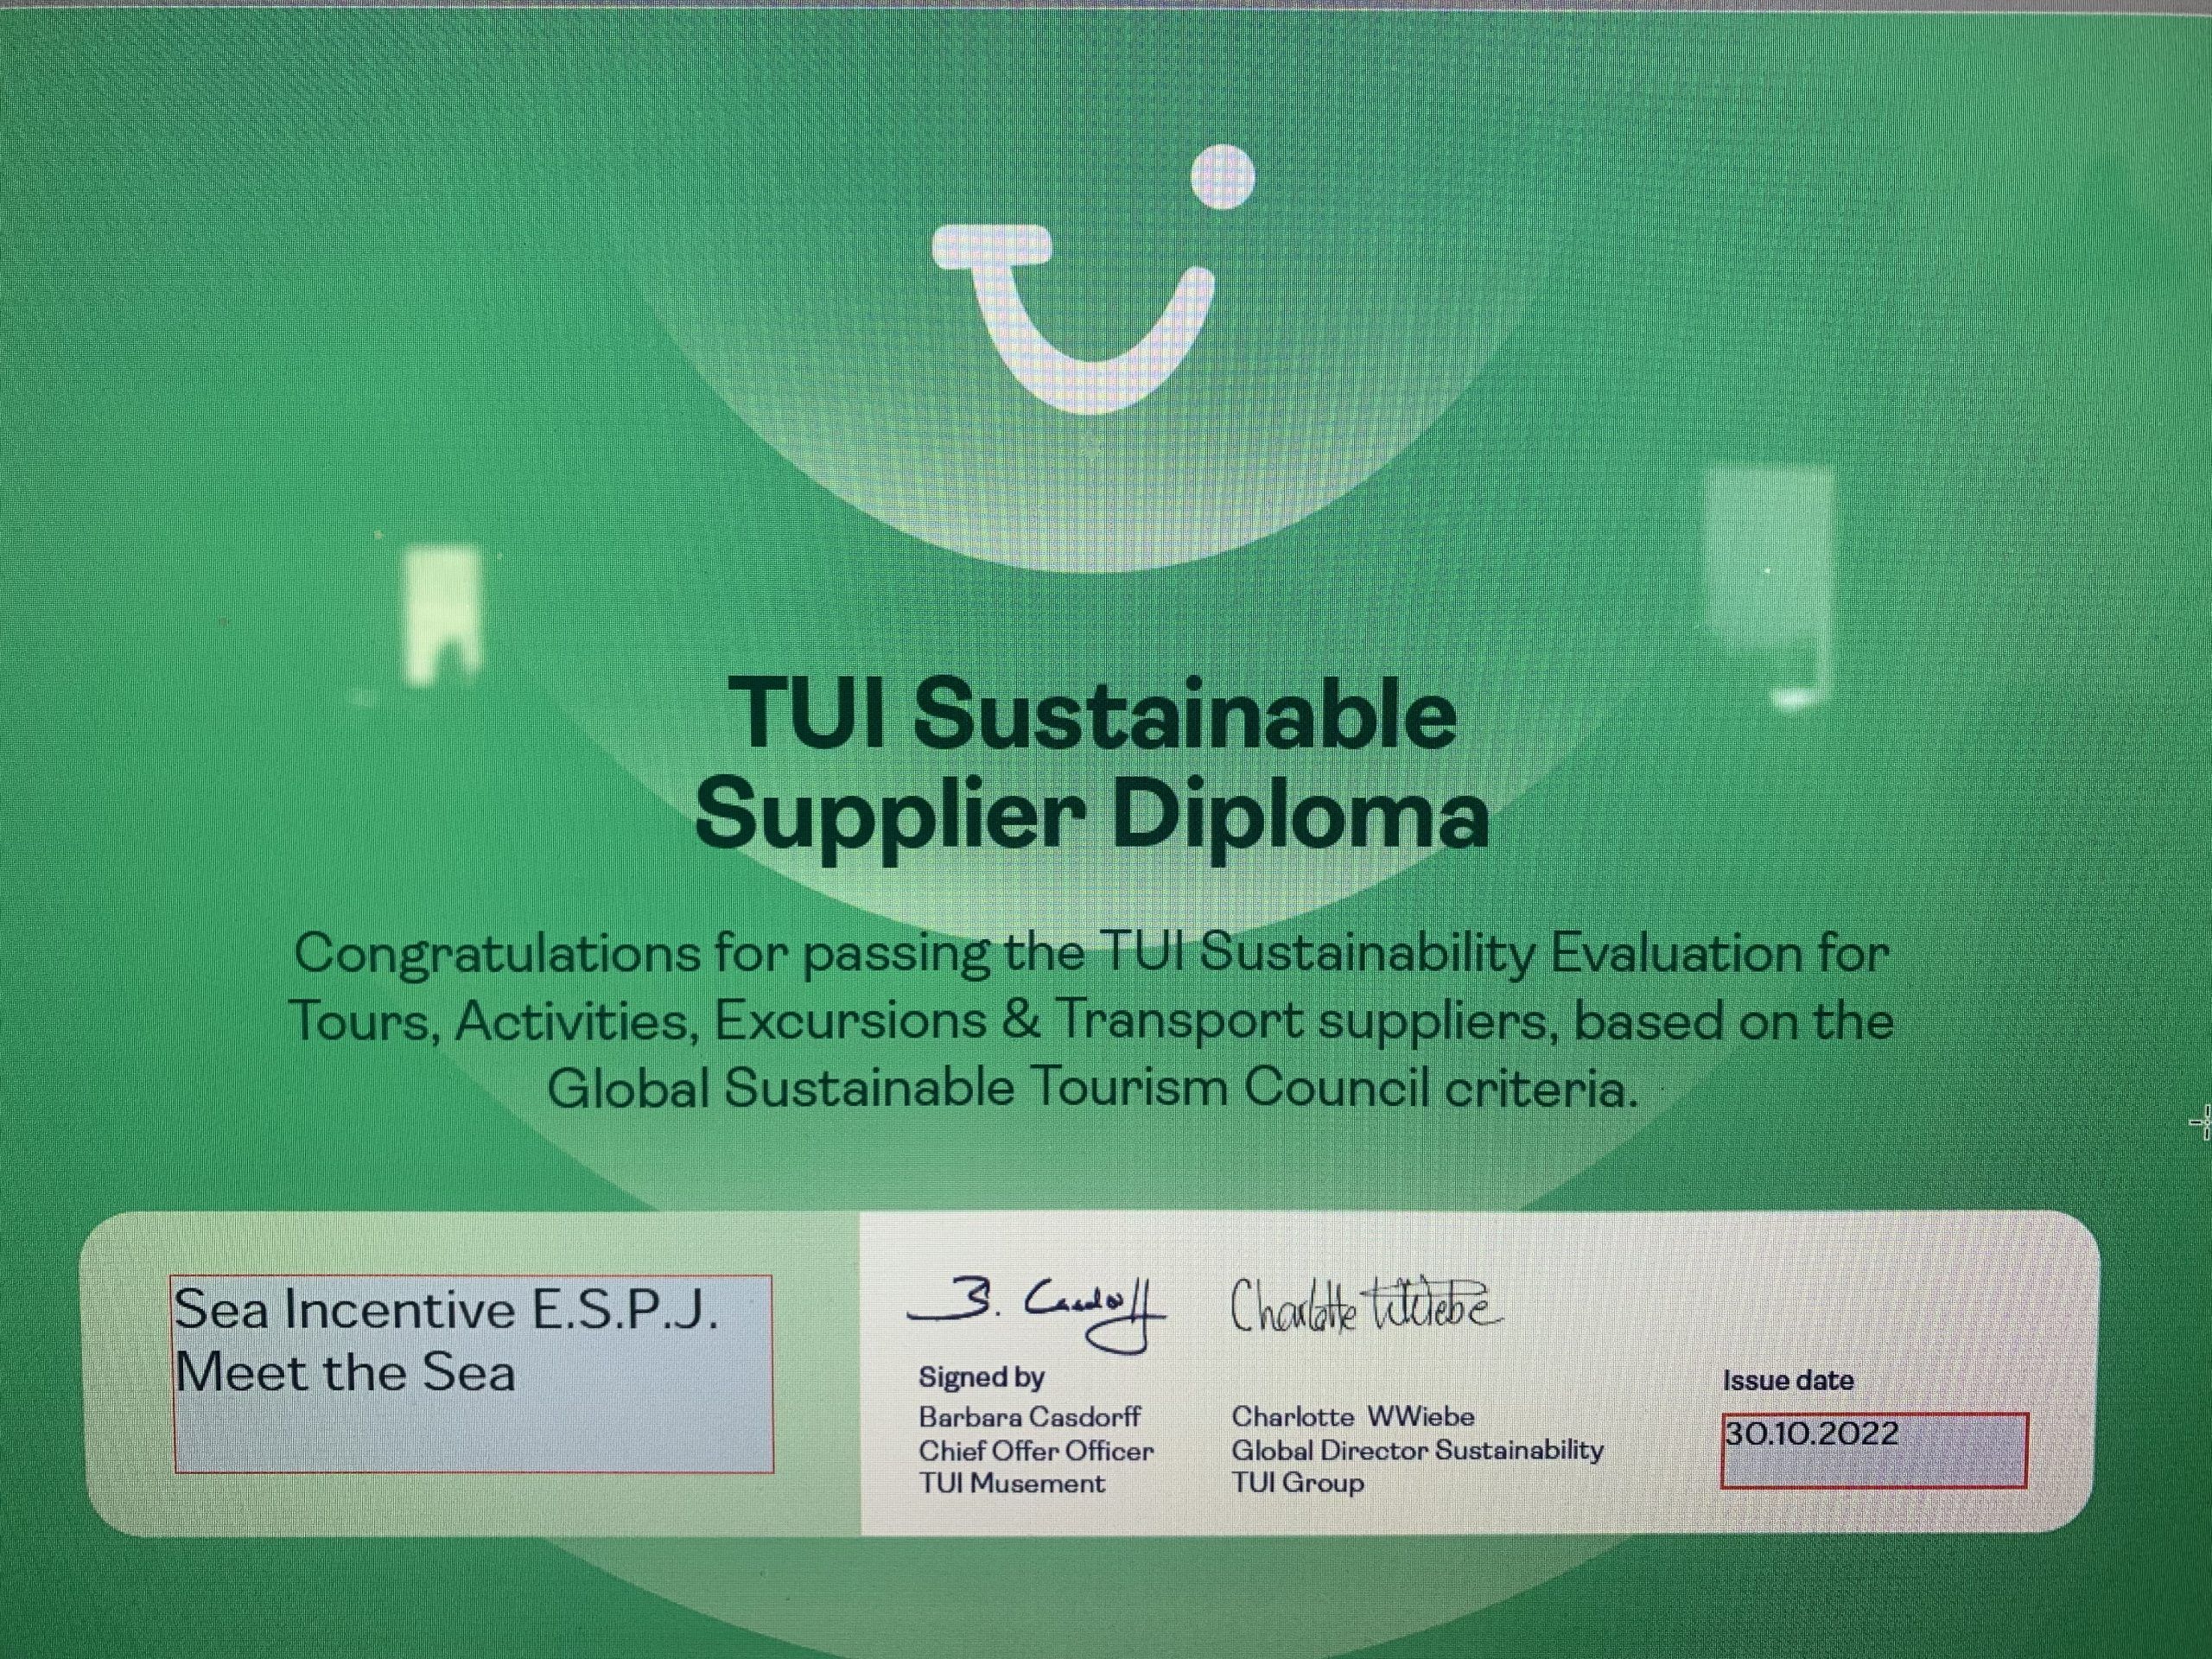 The TUI sustainability diploma